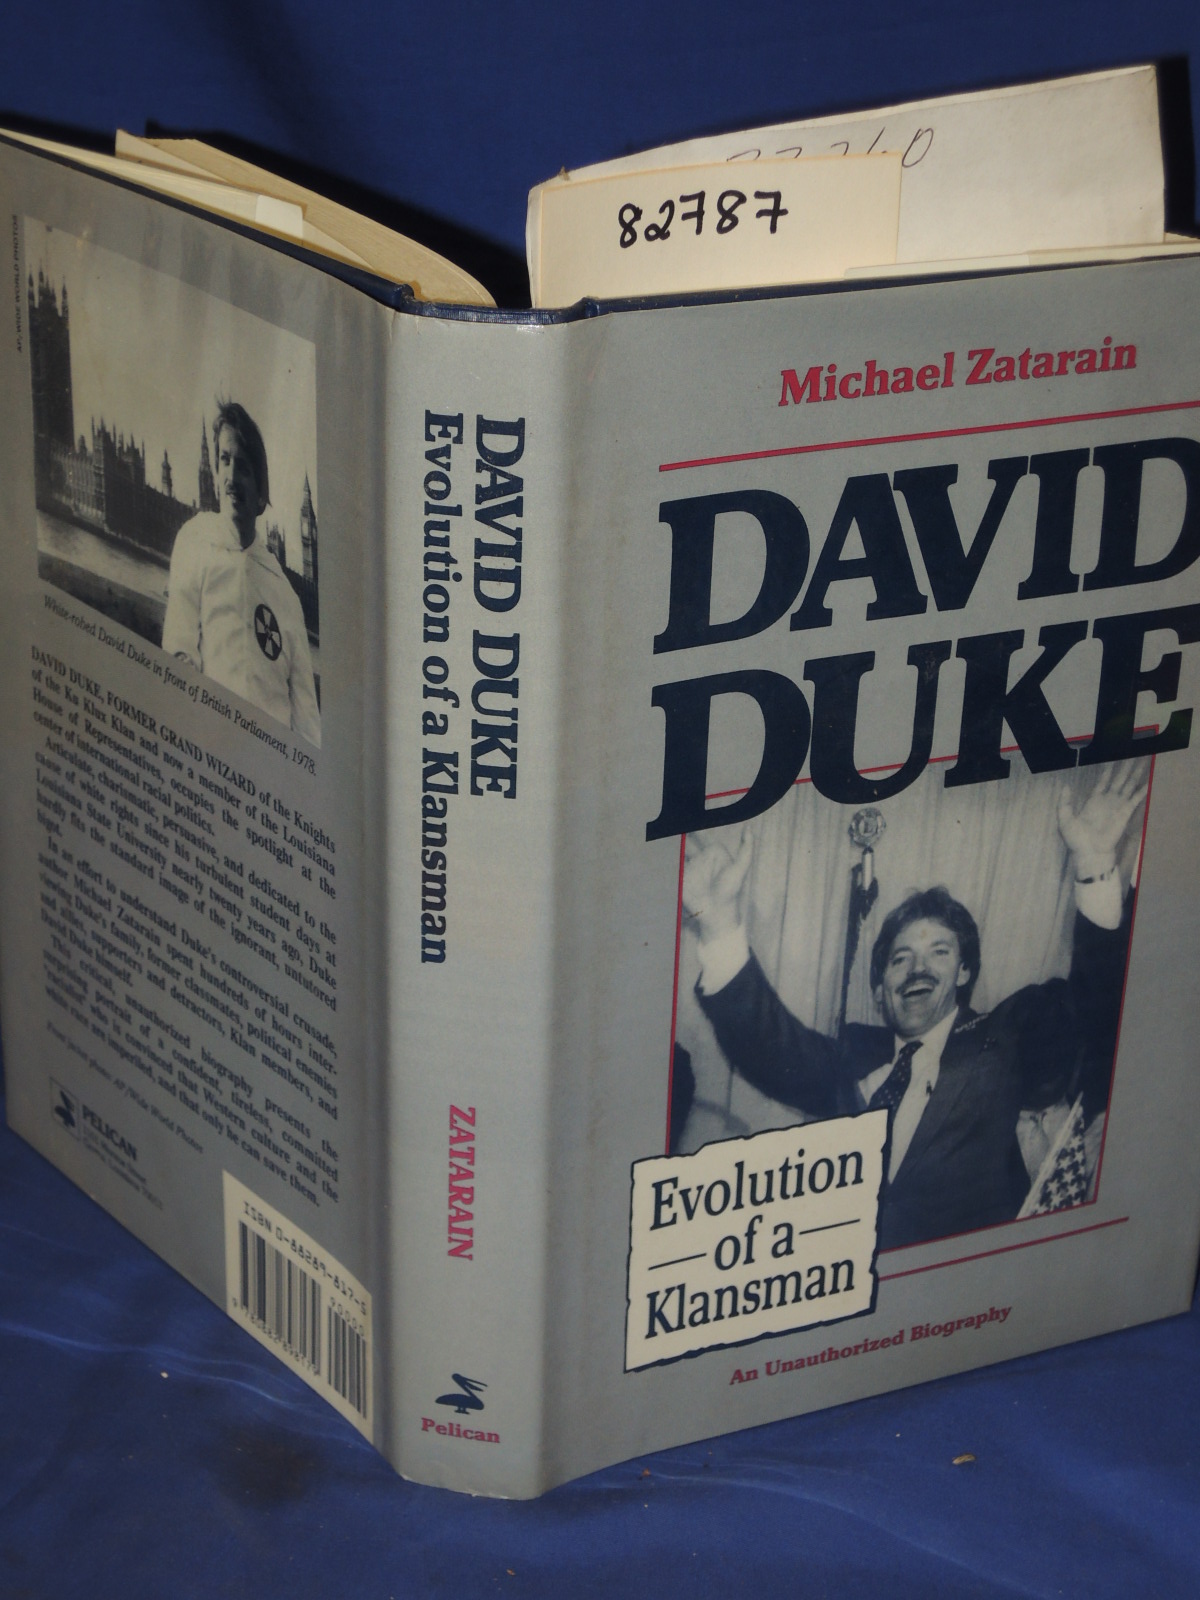 Zatarain, Michael  Author signature on ...: David Duke - Evolution of a Klansman